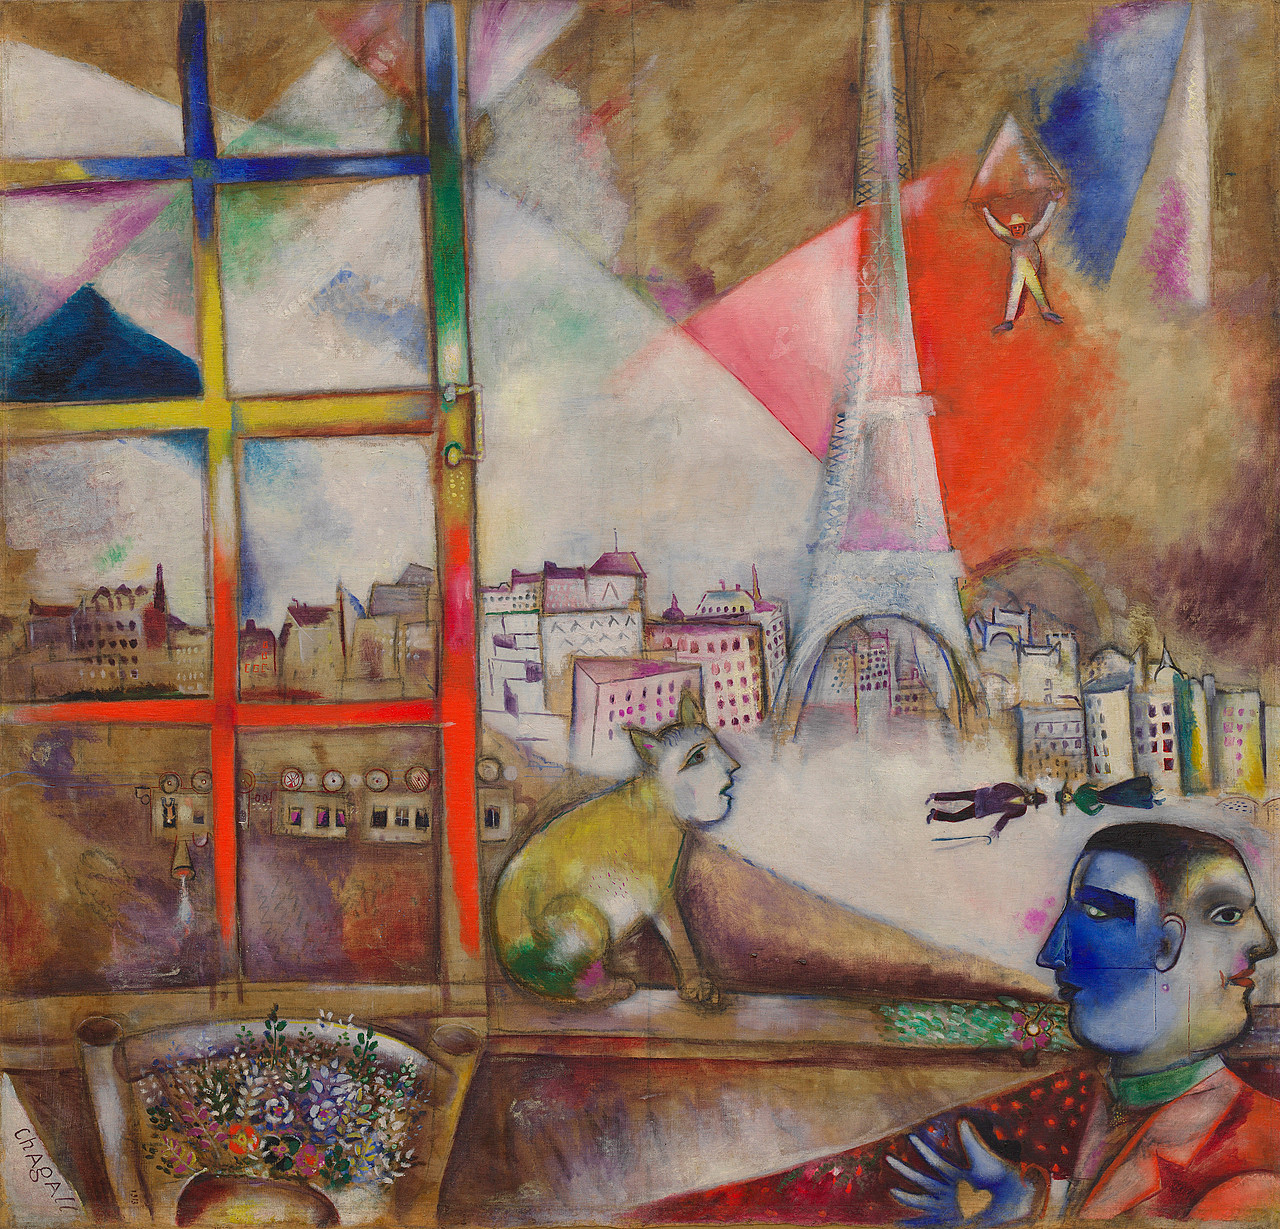 Image: Marc Chagall. Paris Through the Window, 1913. Guggenheim Museum.